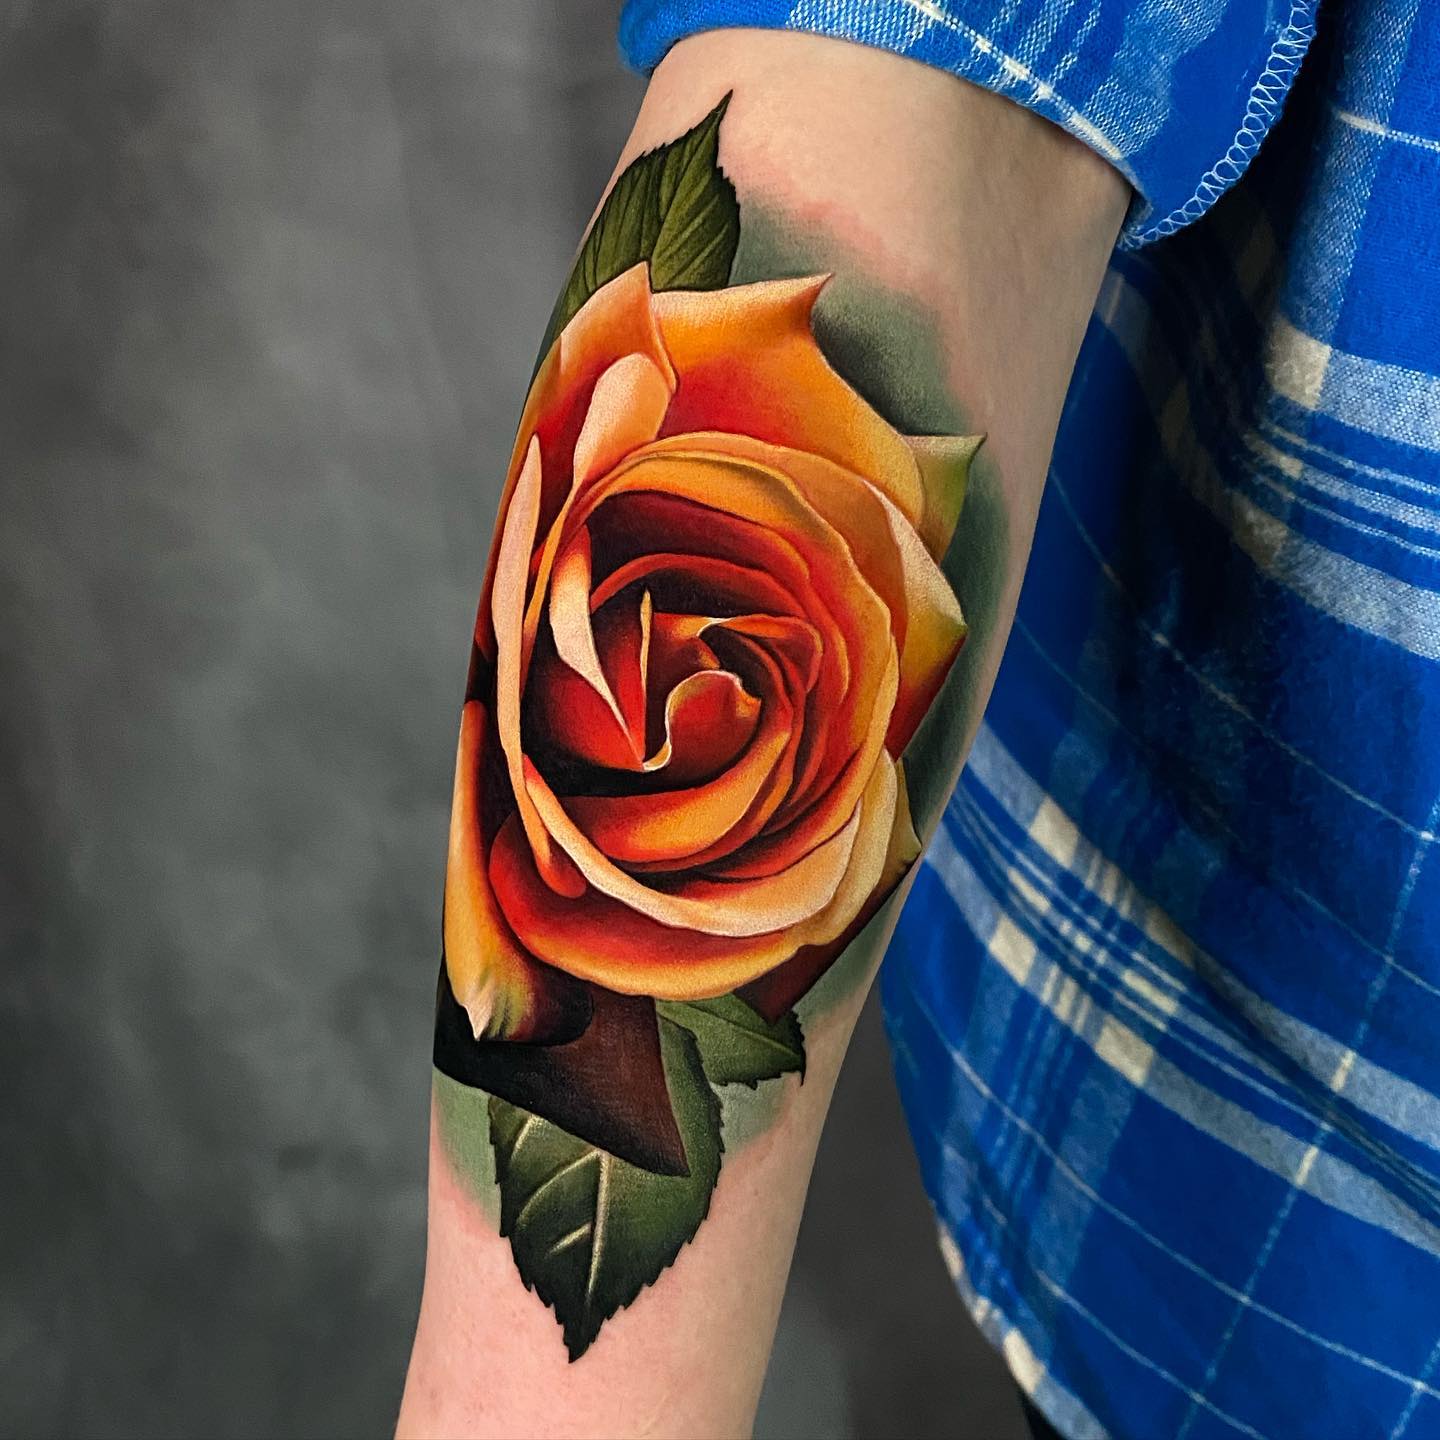 bright orange single rose tattoo on mans forearm